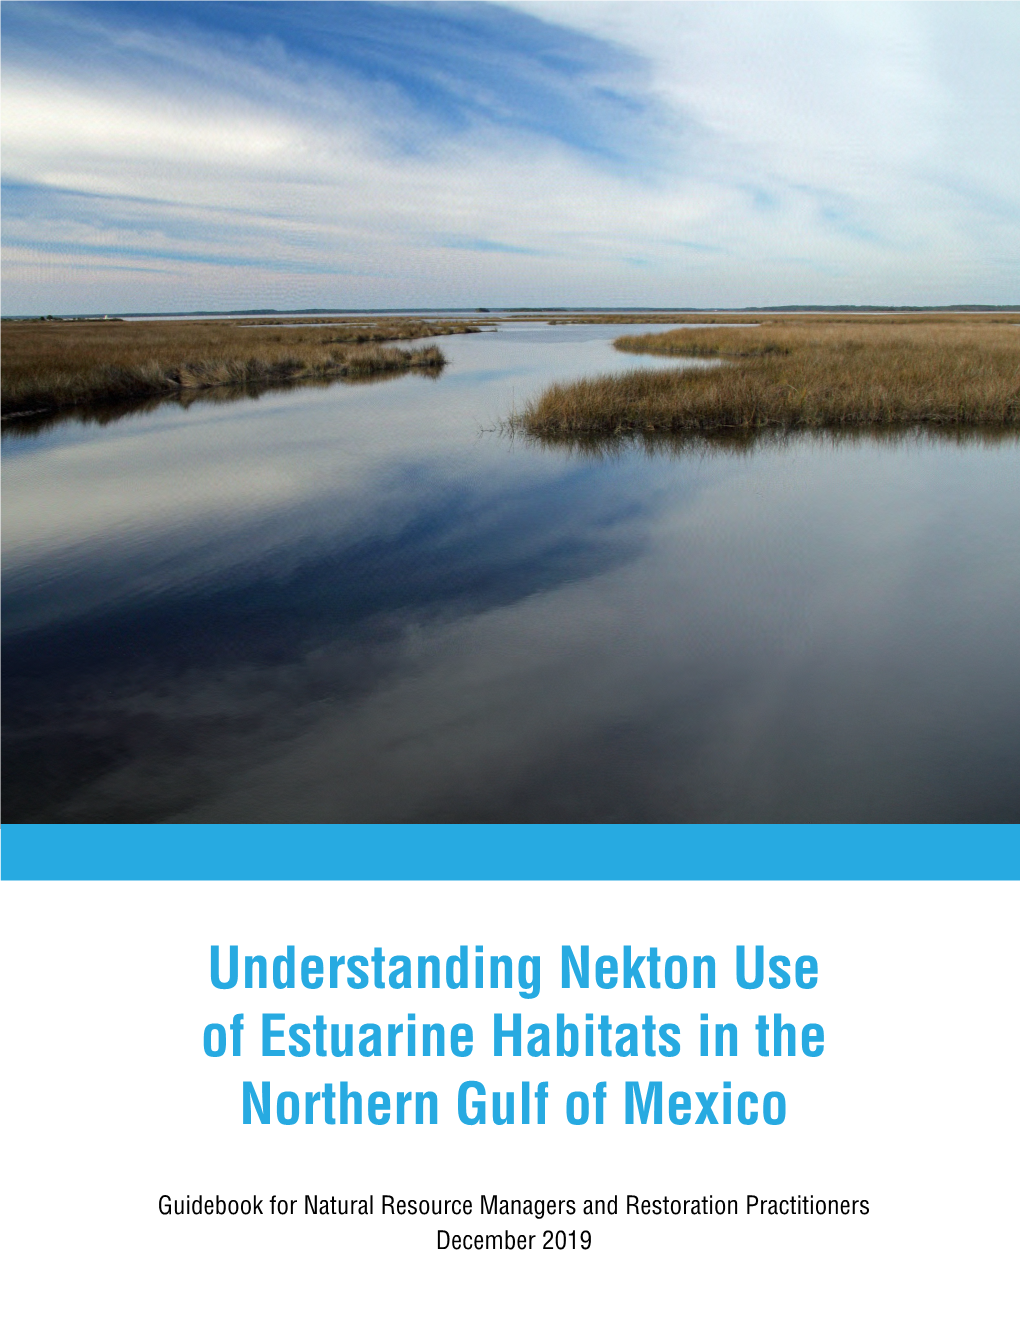 Understanding Nekton Use of Estuarine Habitats in the Northern Gulf of Mexico